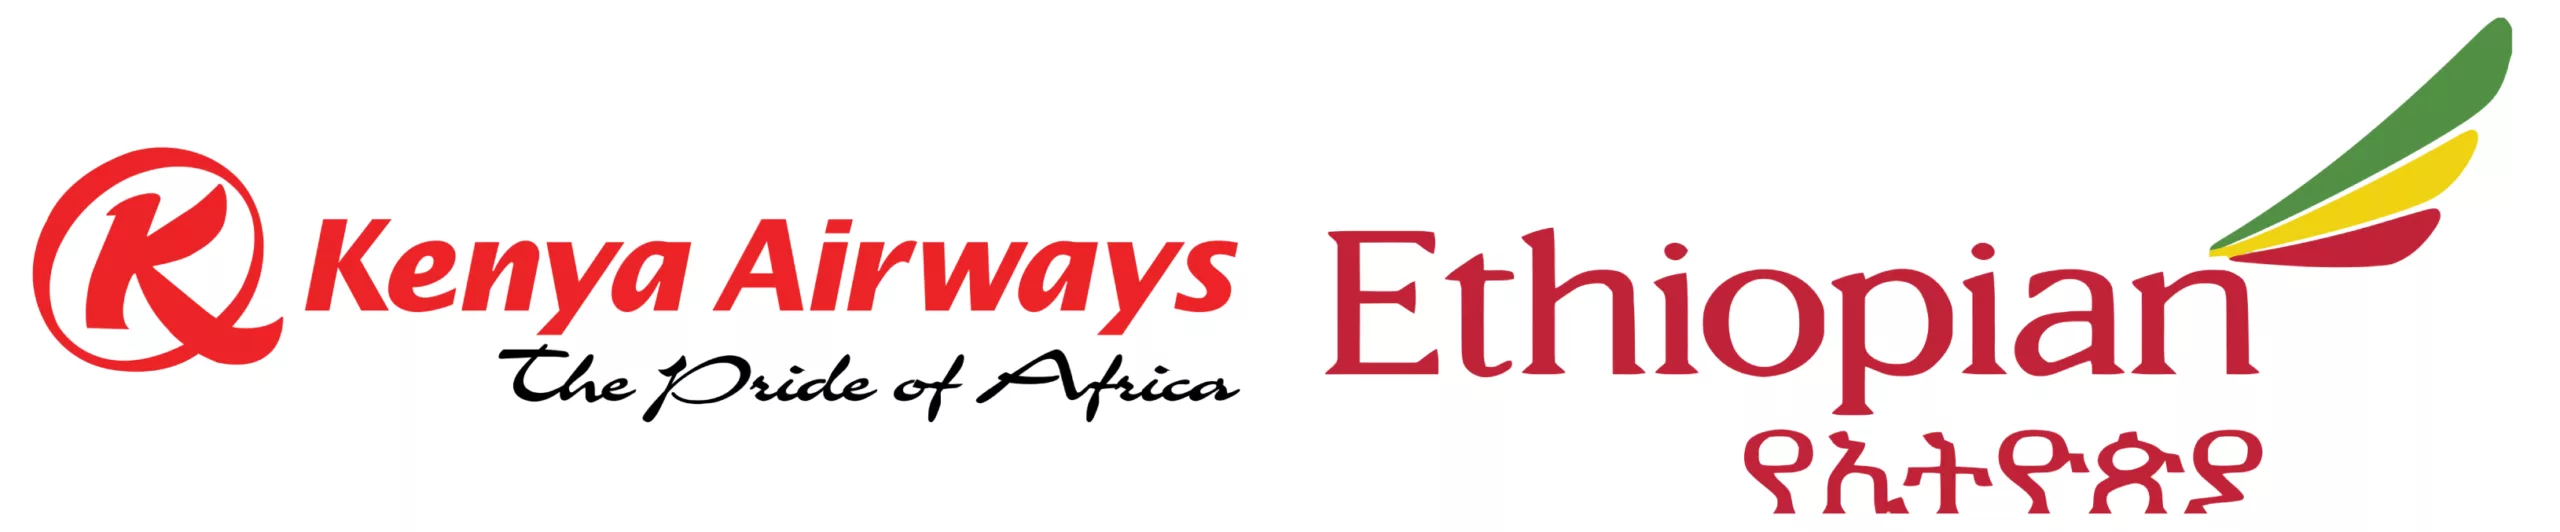 kenyan airways ethiopian airways